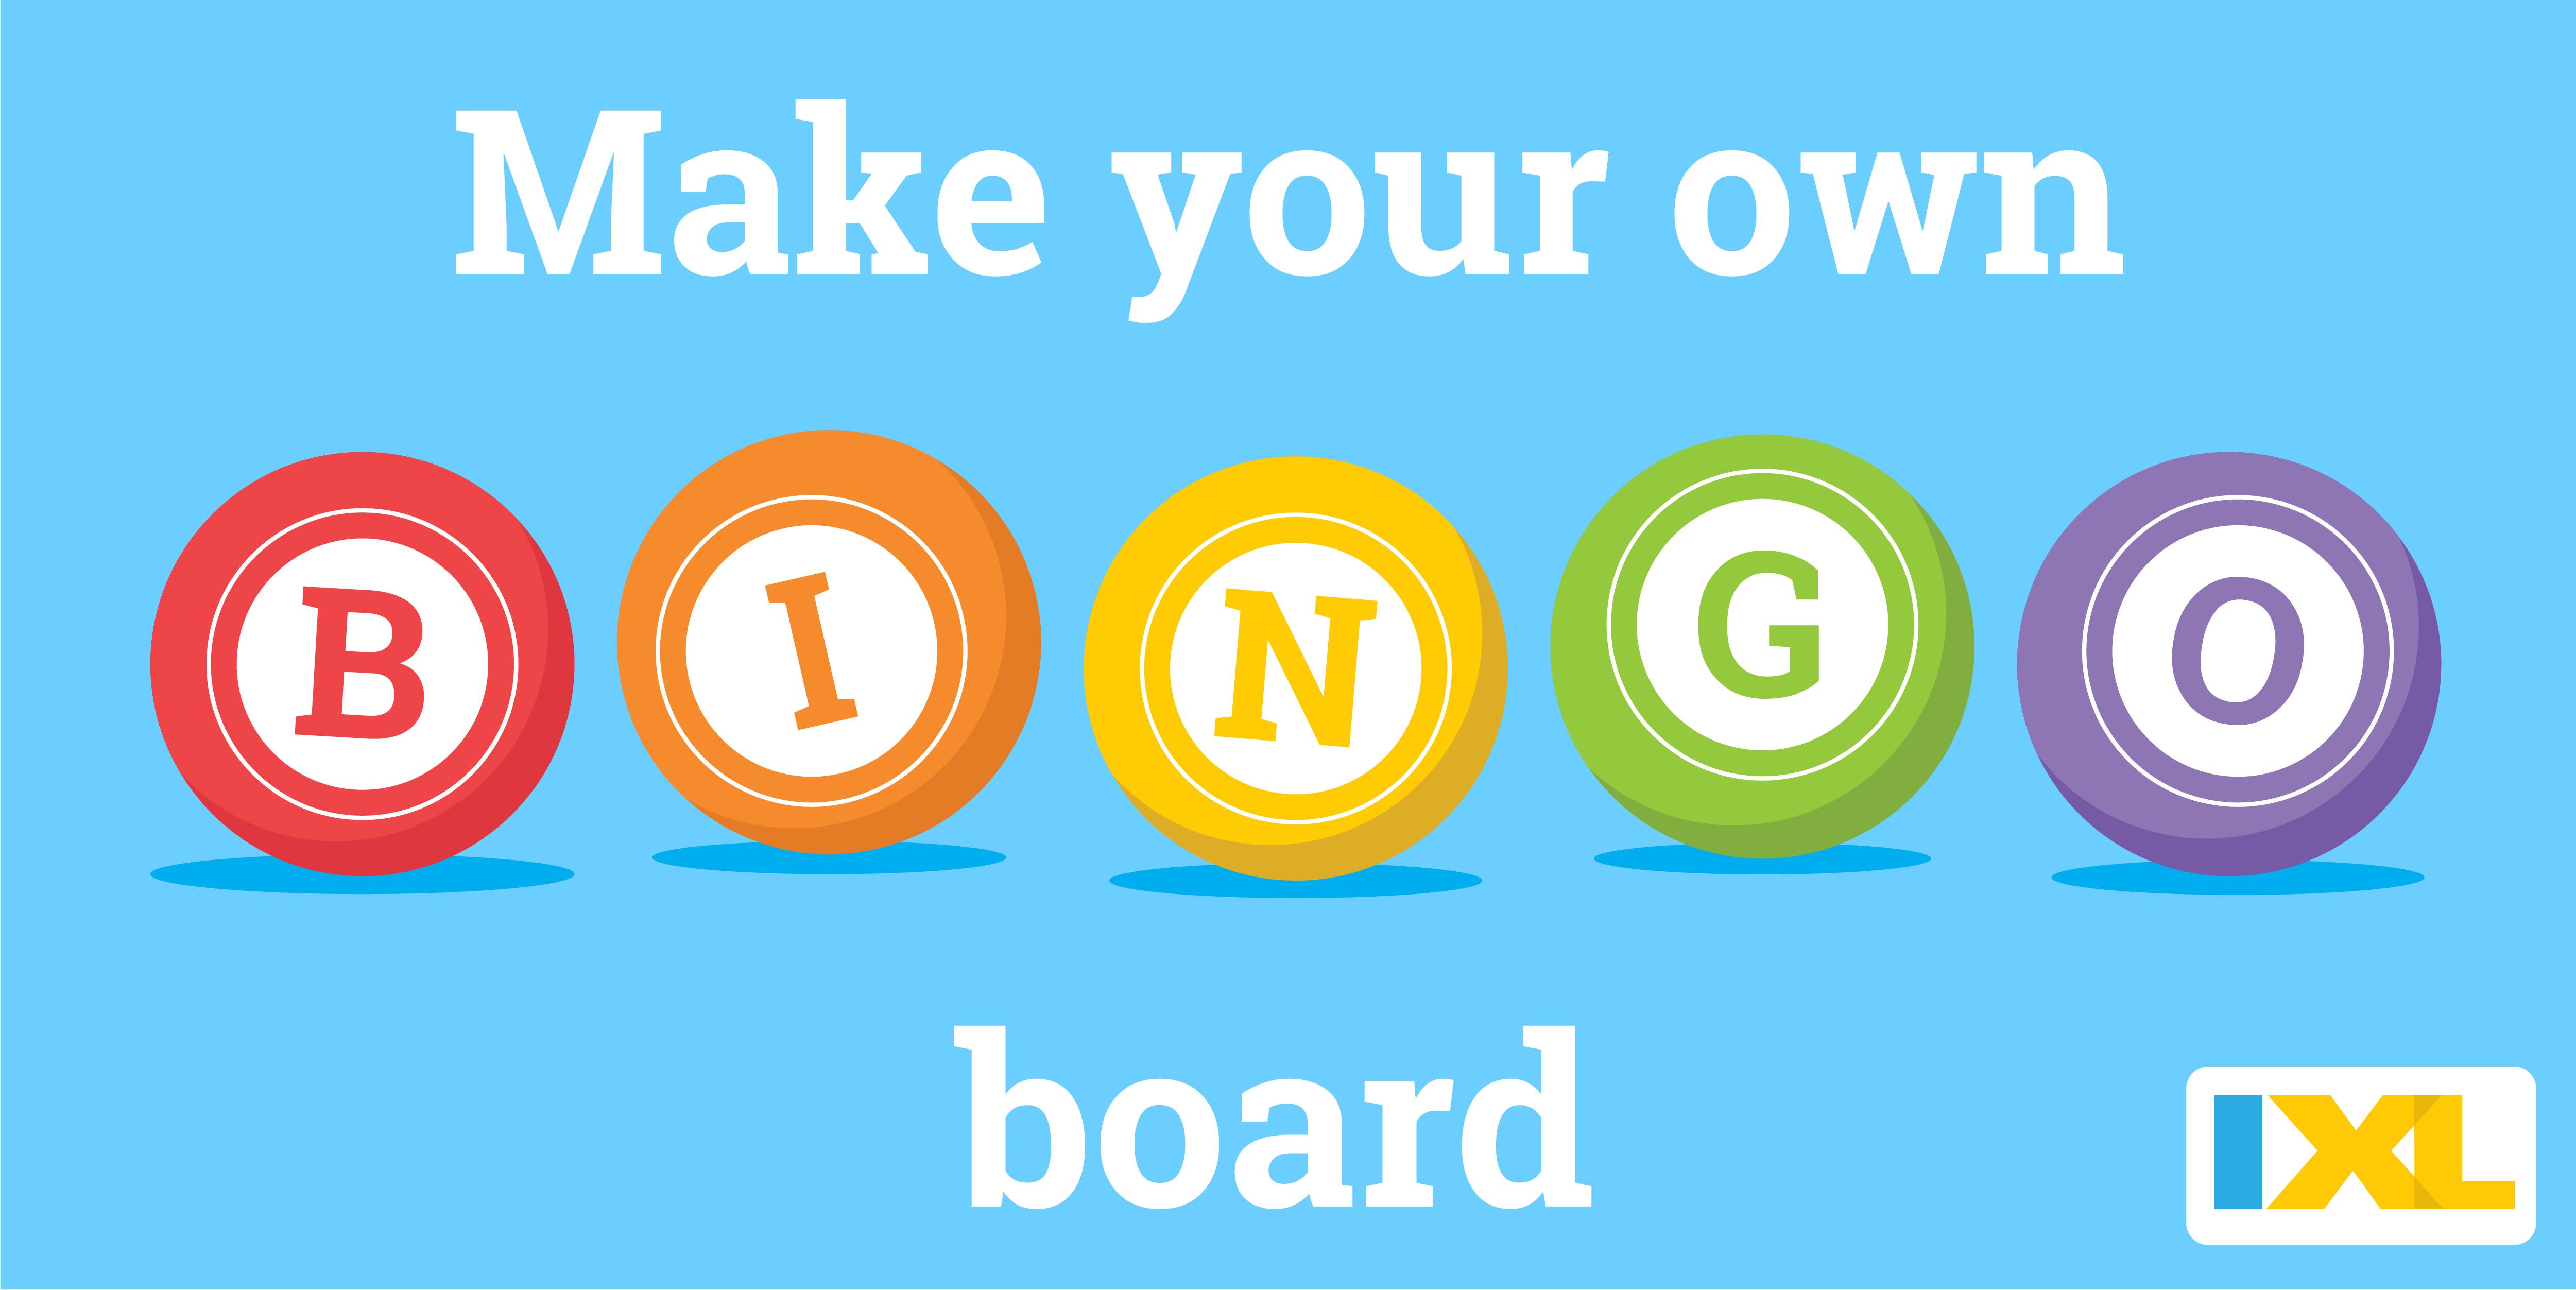 Do Your Own Bingo